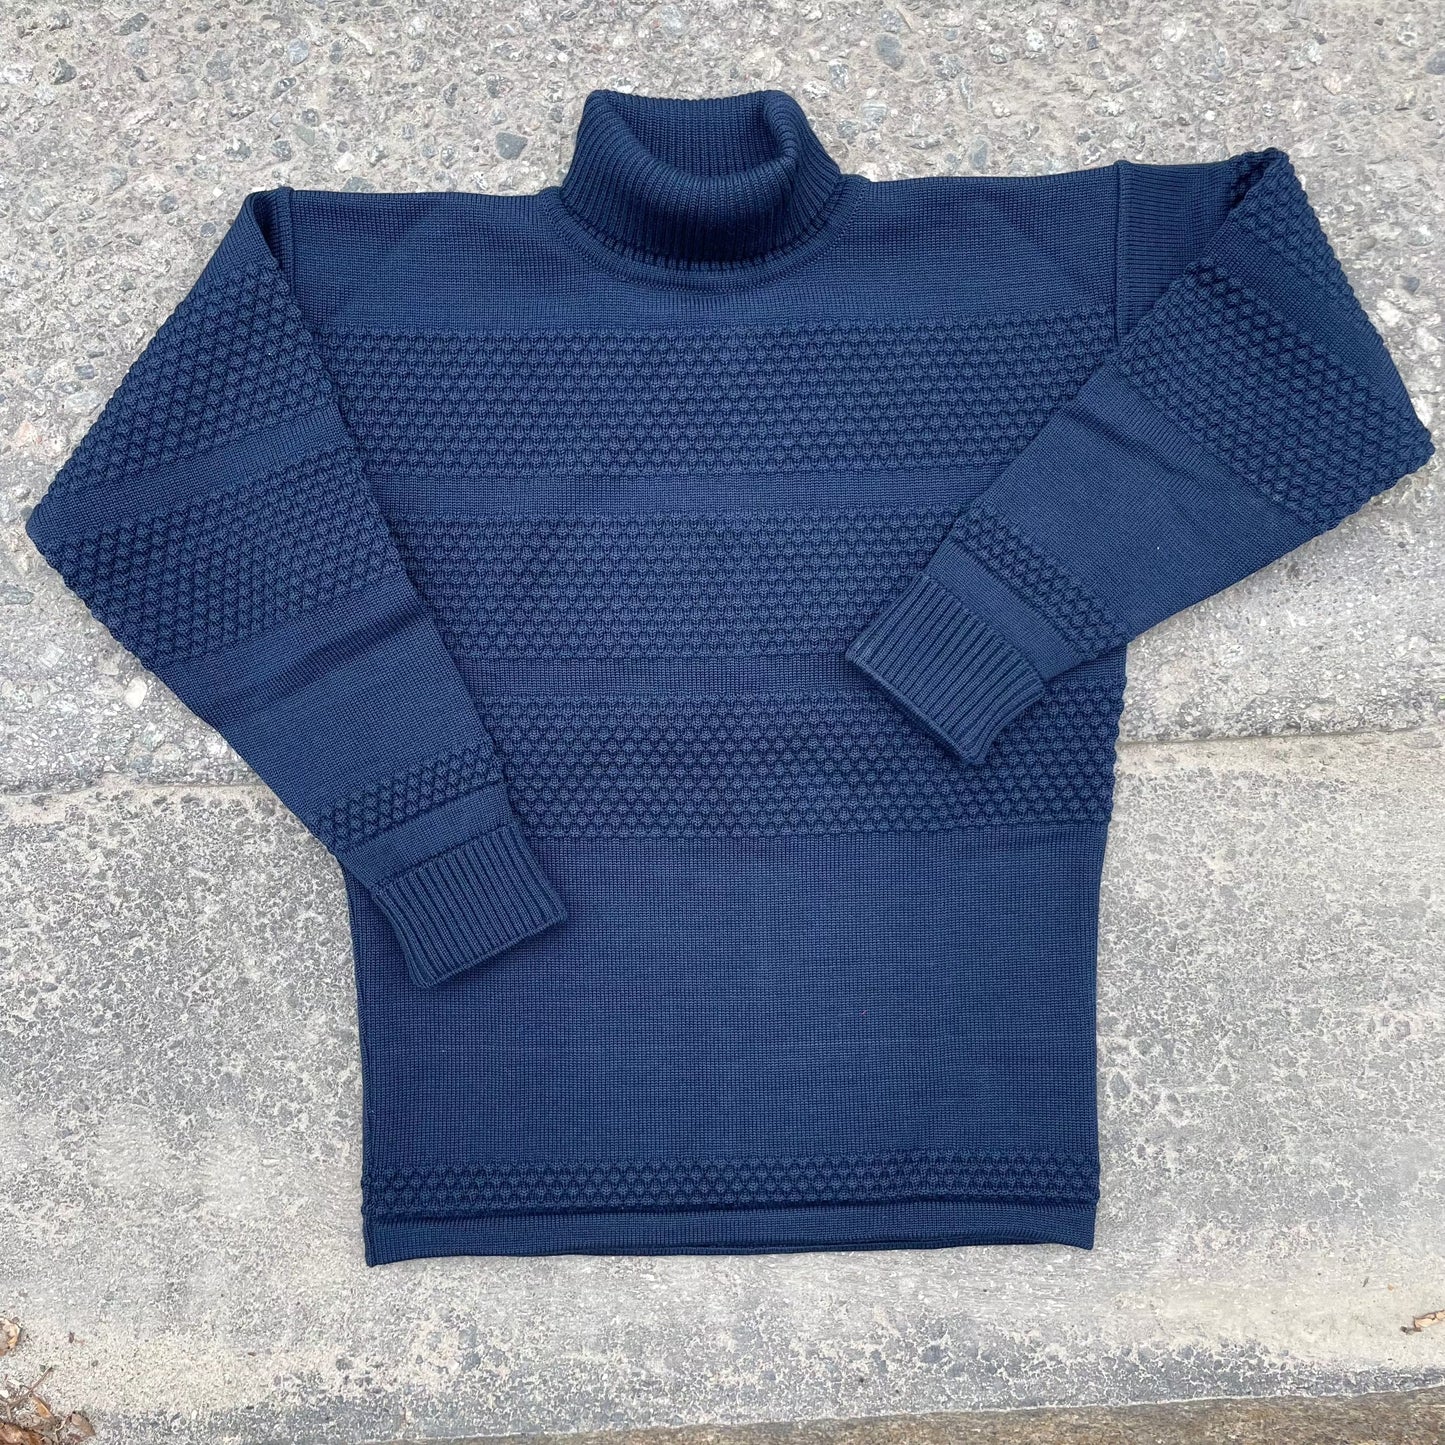 SNS - Fisherman Sweater (Manuel blue)